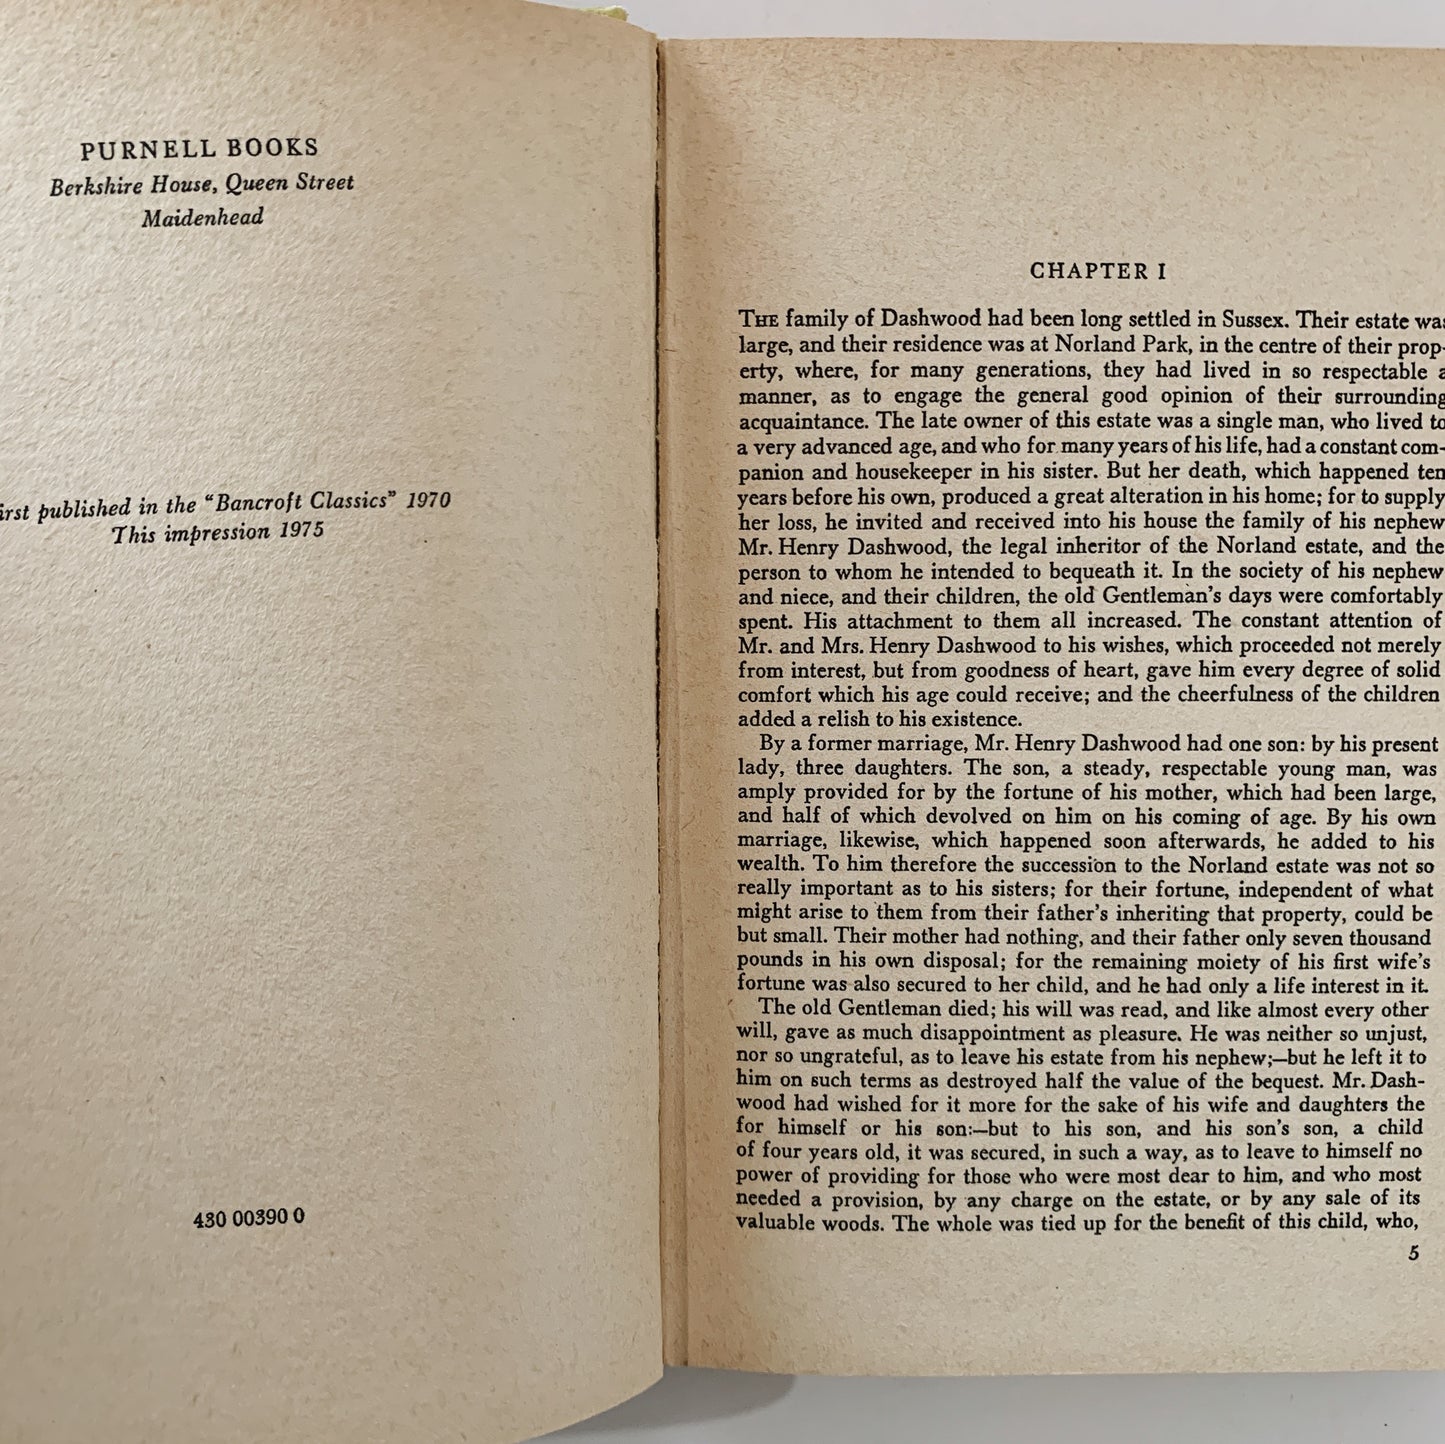 Sense and Sensibility, Bancroft Classics, 1975, Jane Austen Abridged for Young Readers